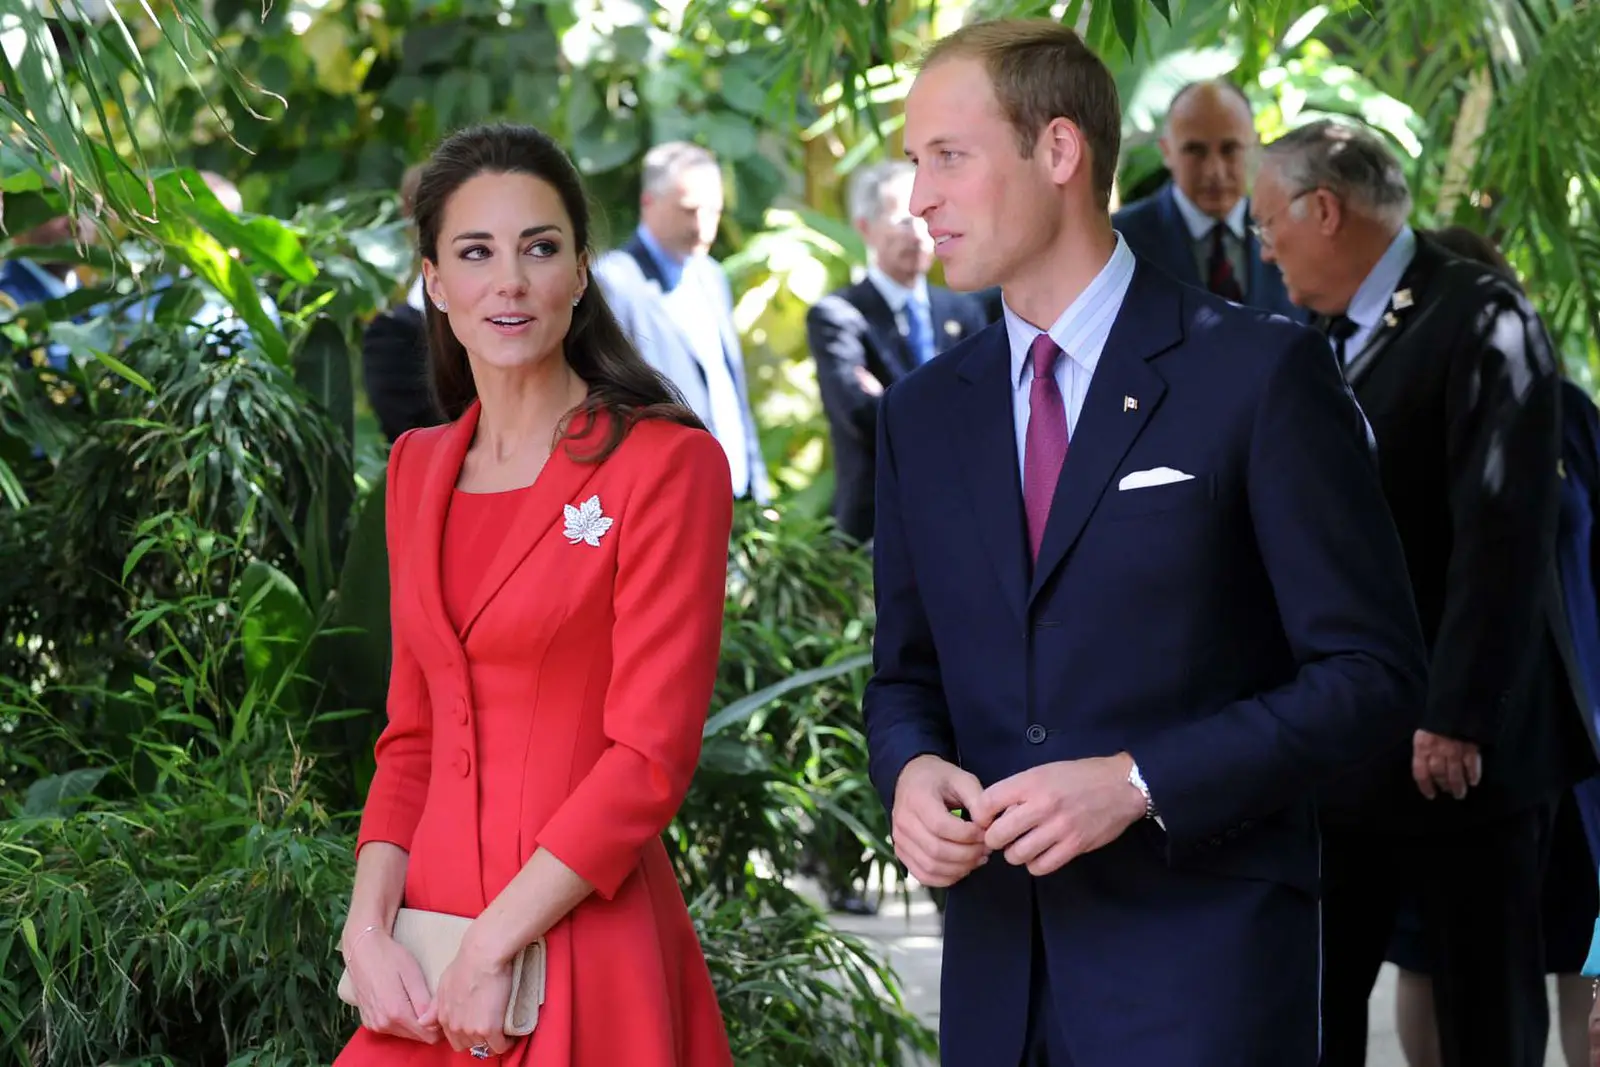 The Duke and Duchess of Cambridge bid farewell to Canada in 2011